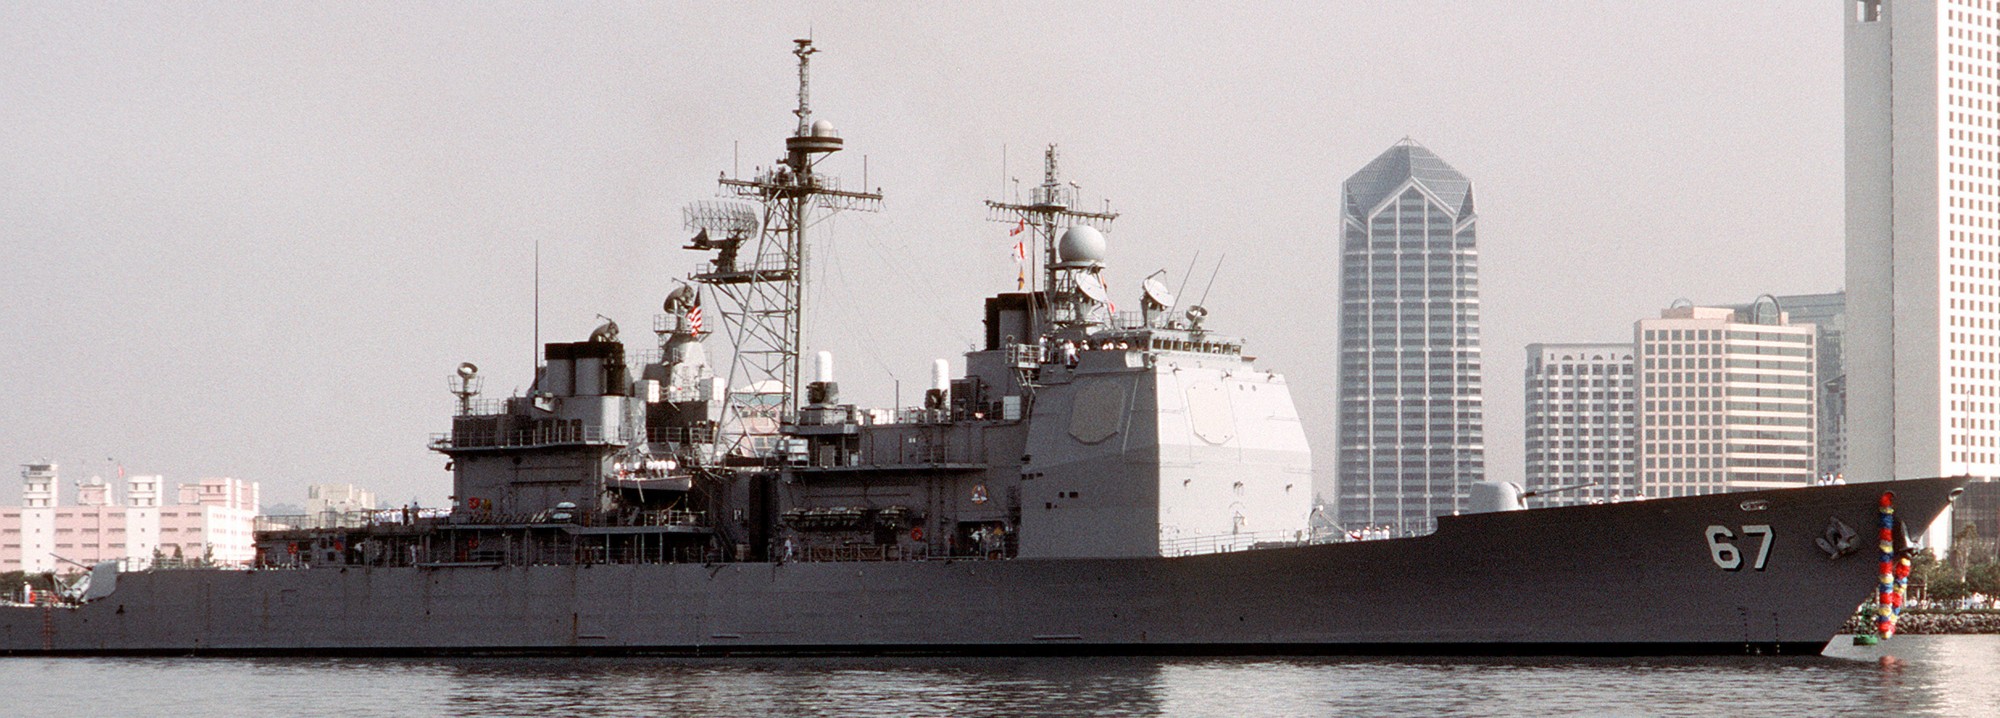 cg-67 uss shiloh ticonderoga class guided missile cruiser aegis us navy 114